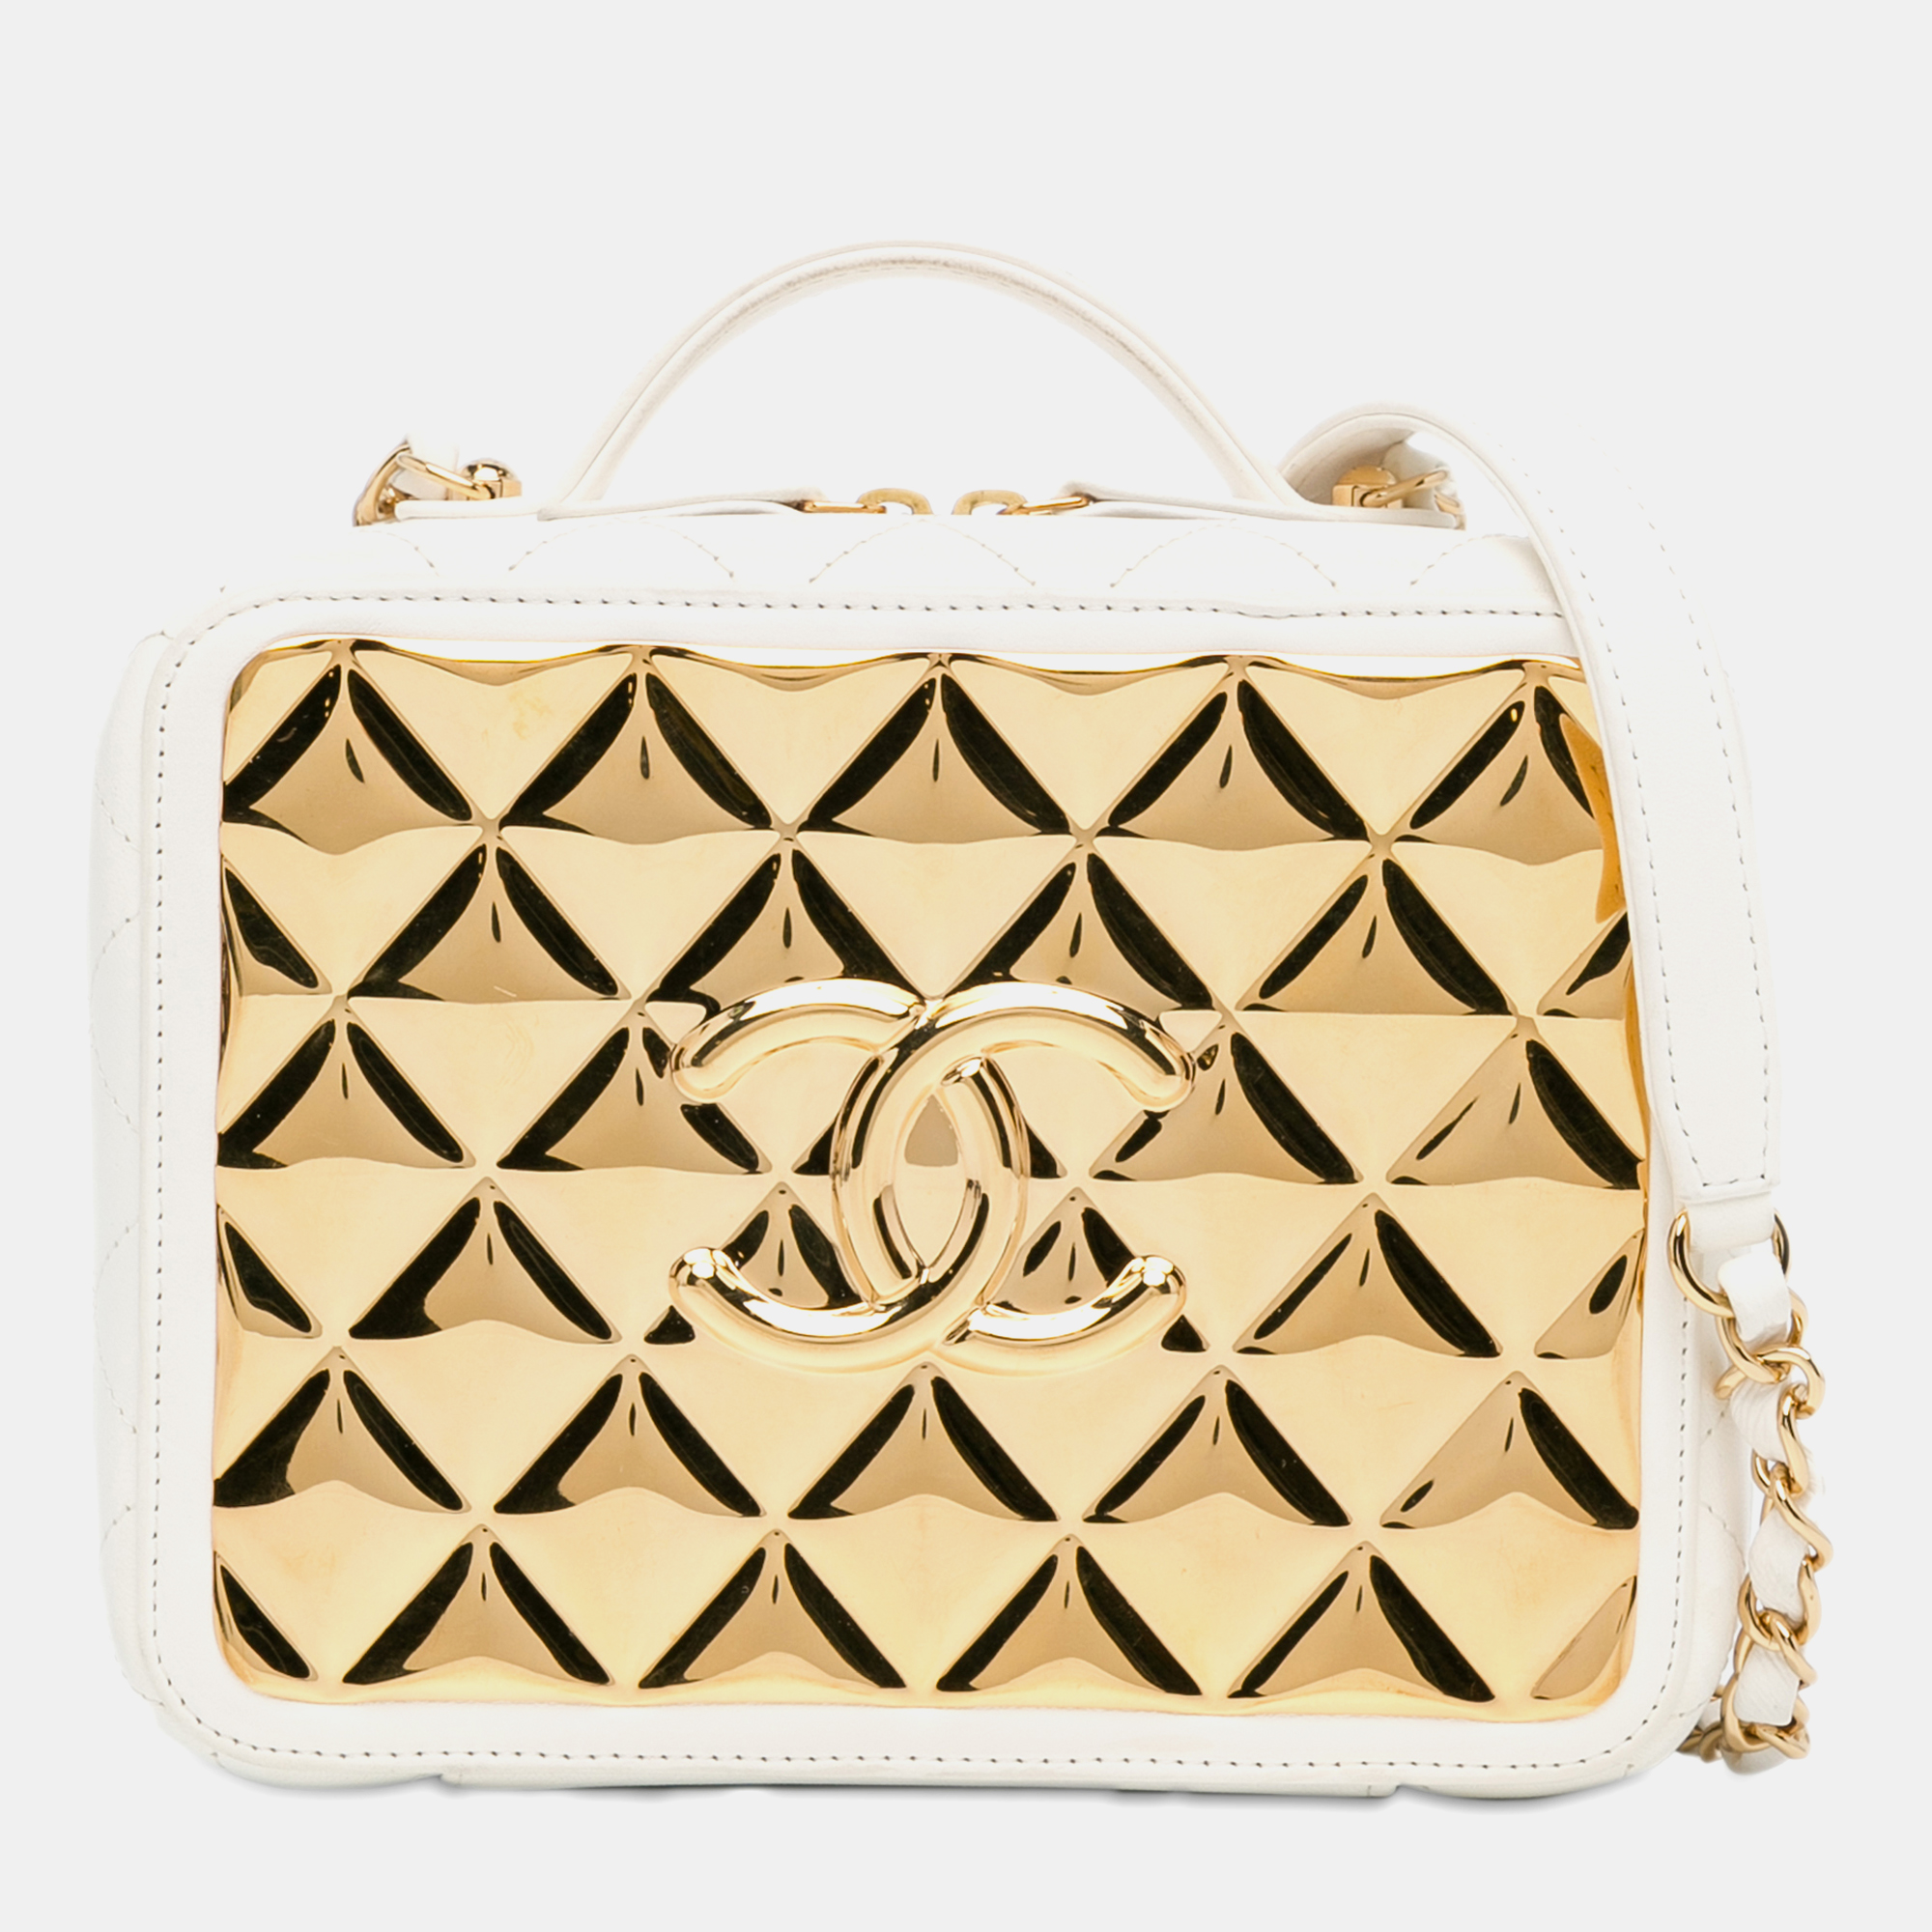 Chanel medium lambskin golden plate vanity case